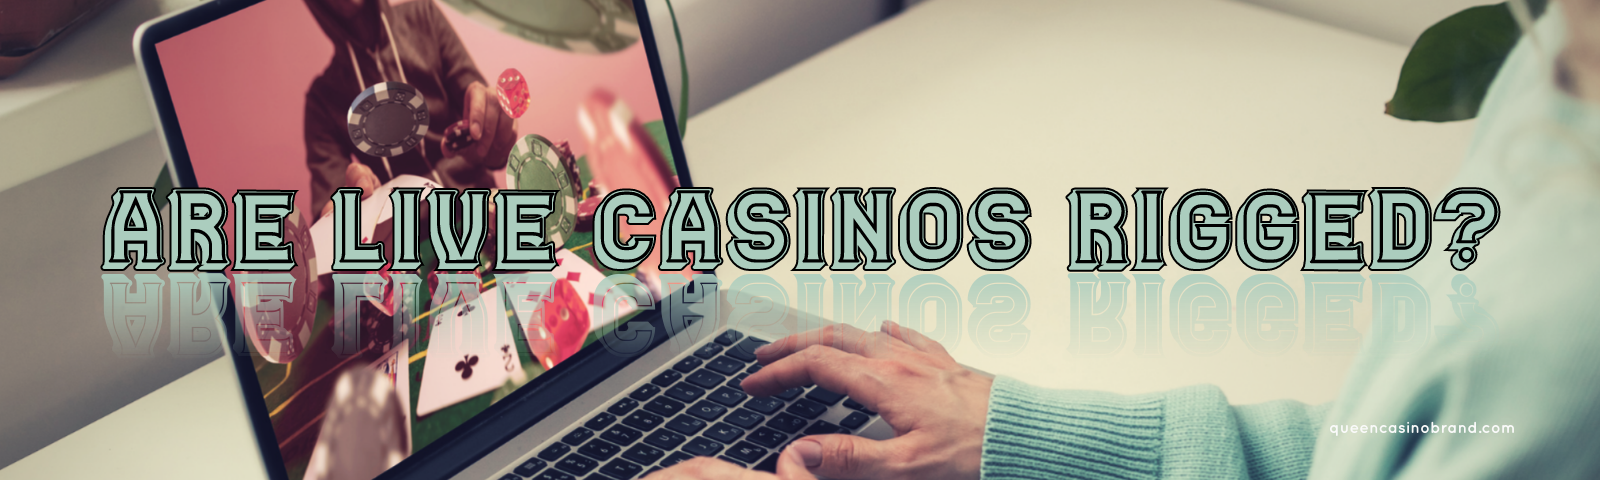 Are Live Casinos Rigged? | Queen Casino Brand